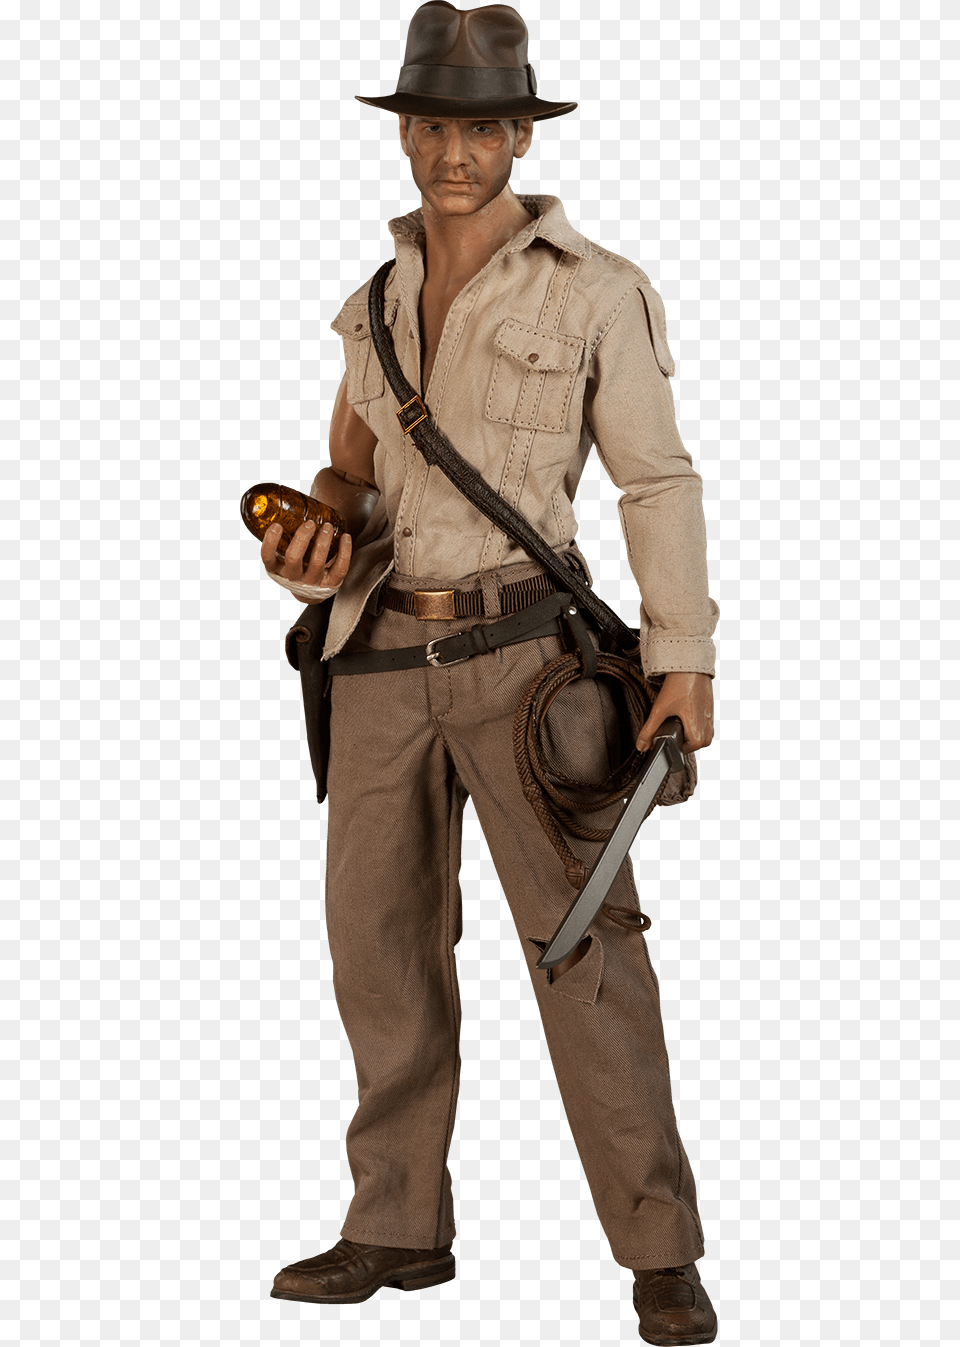 Indiana Jones, Weapon, Handgun, Gun, Firearm Png Image